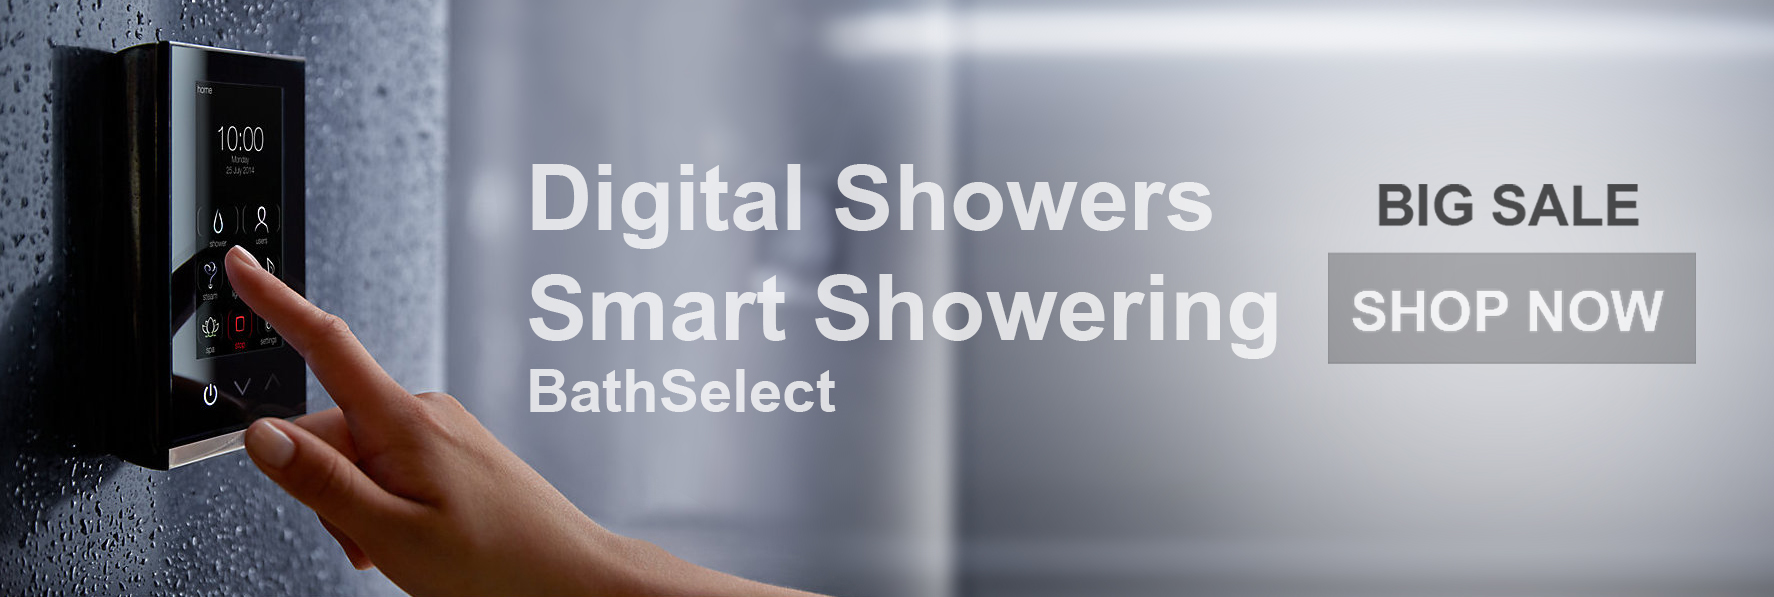 Digital Showers